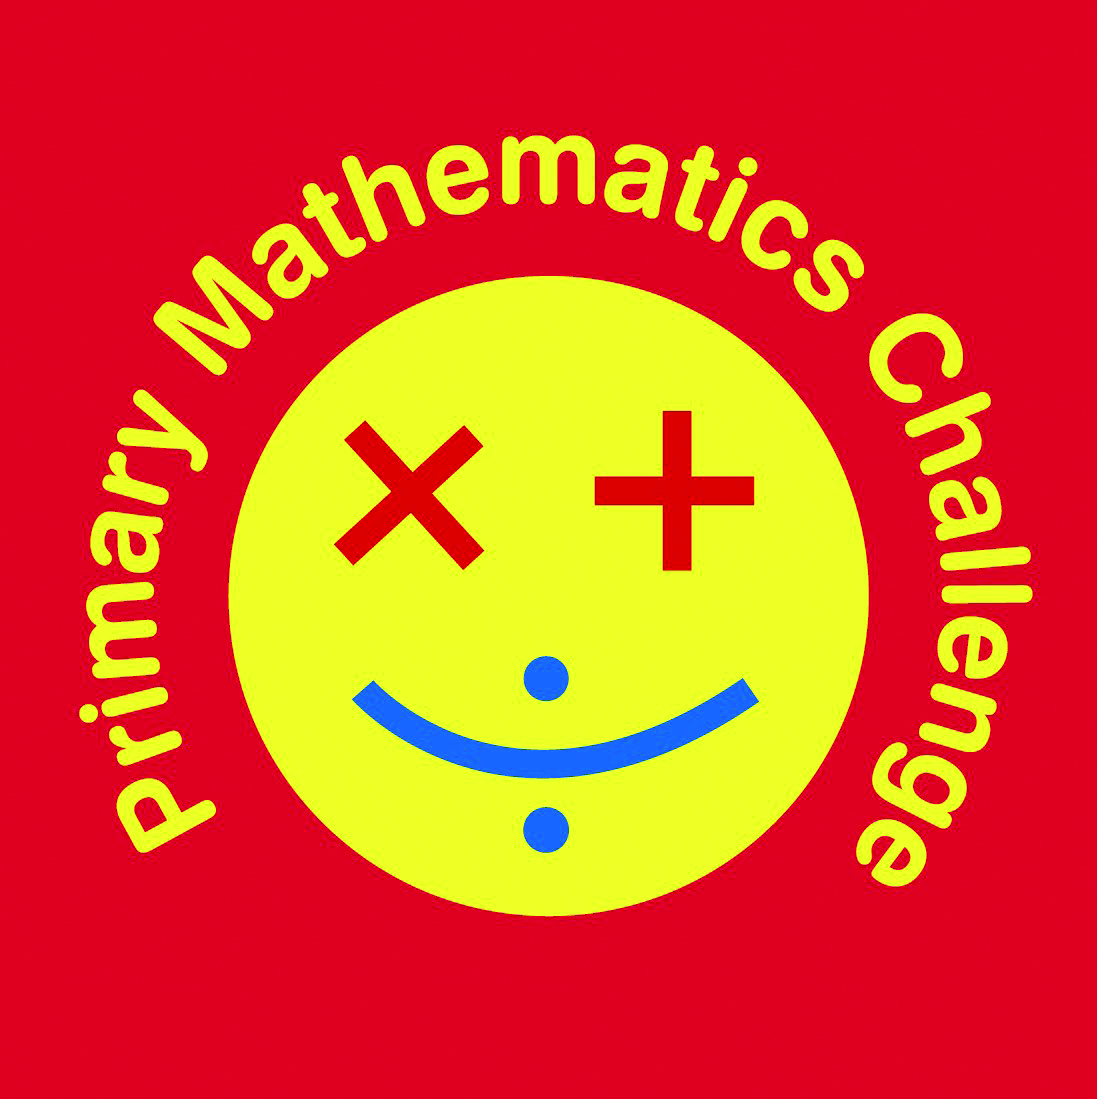 Primary Maths Challenge - PMC Bonus Round Results 2019